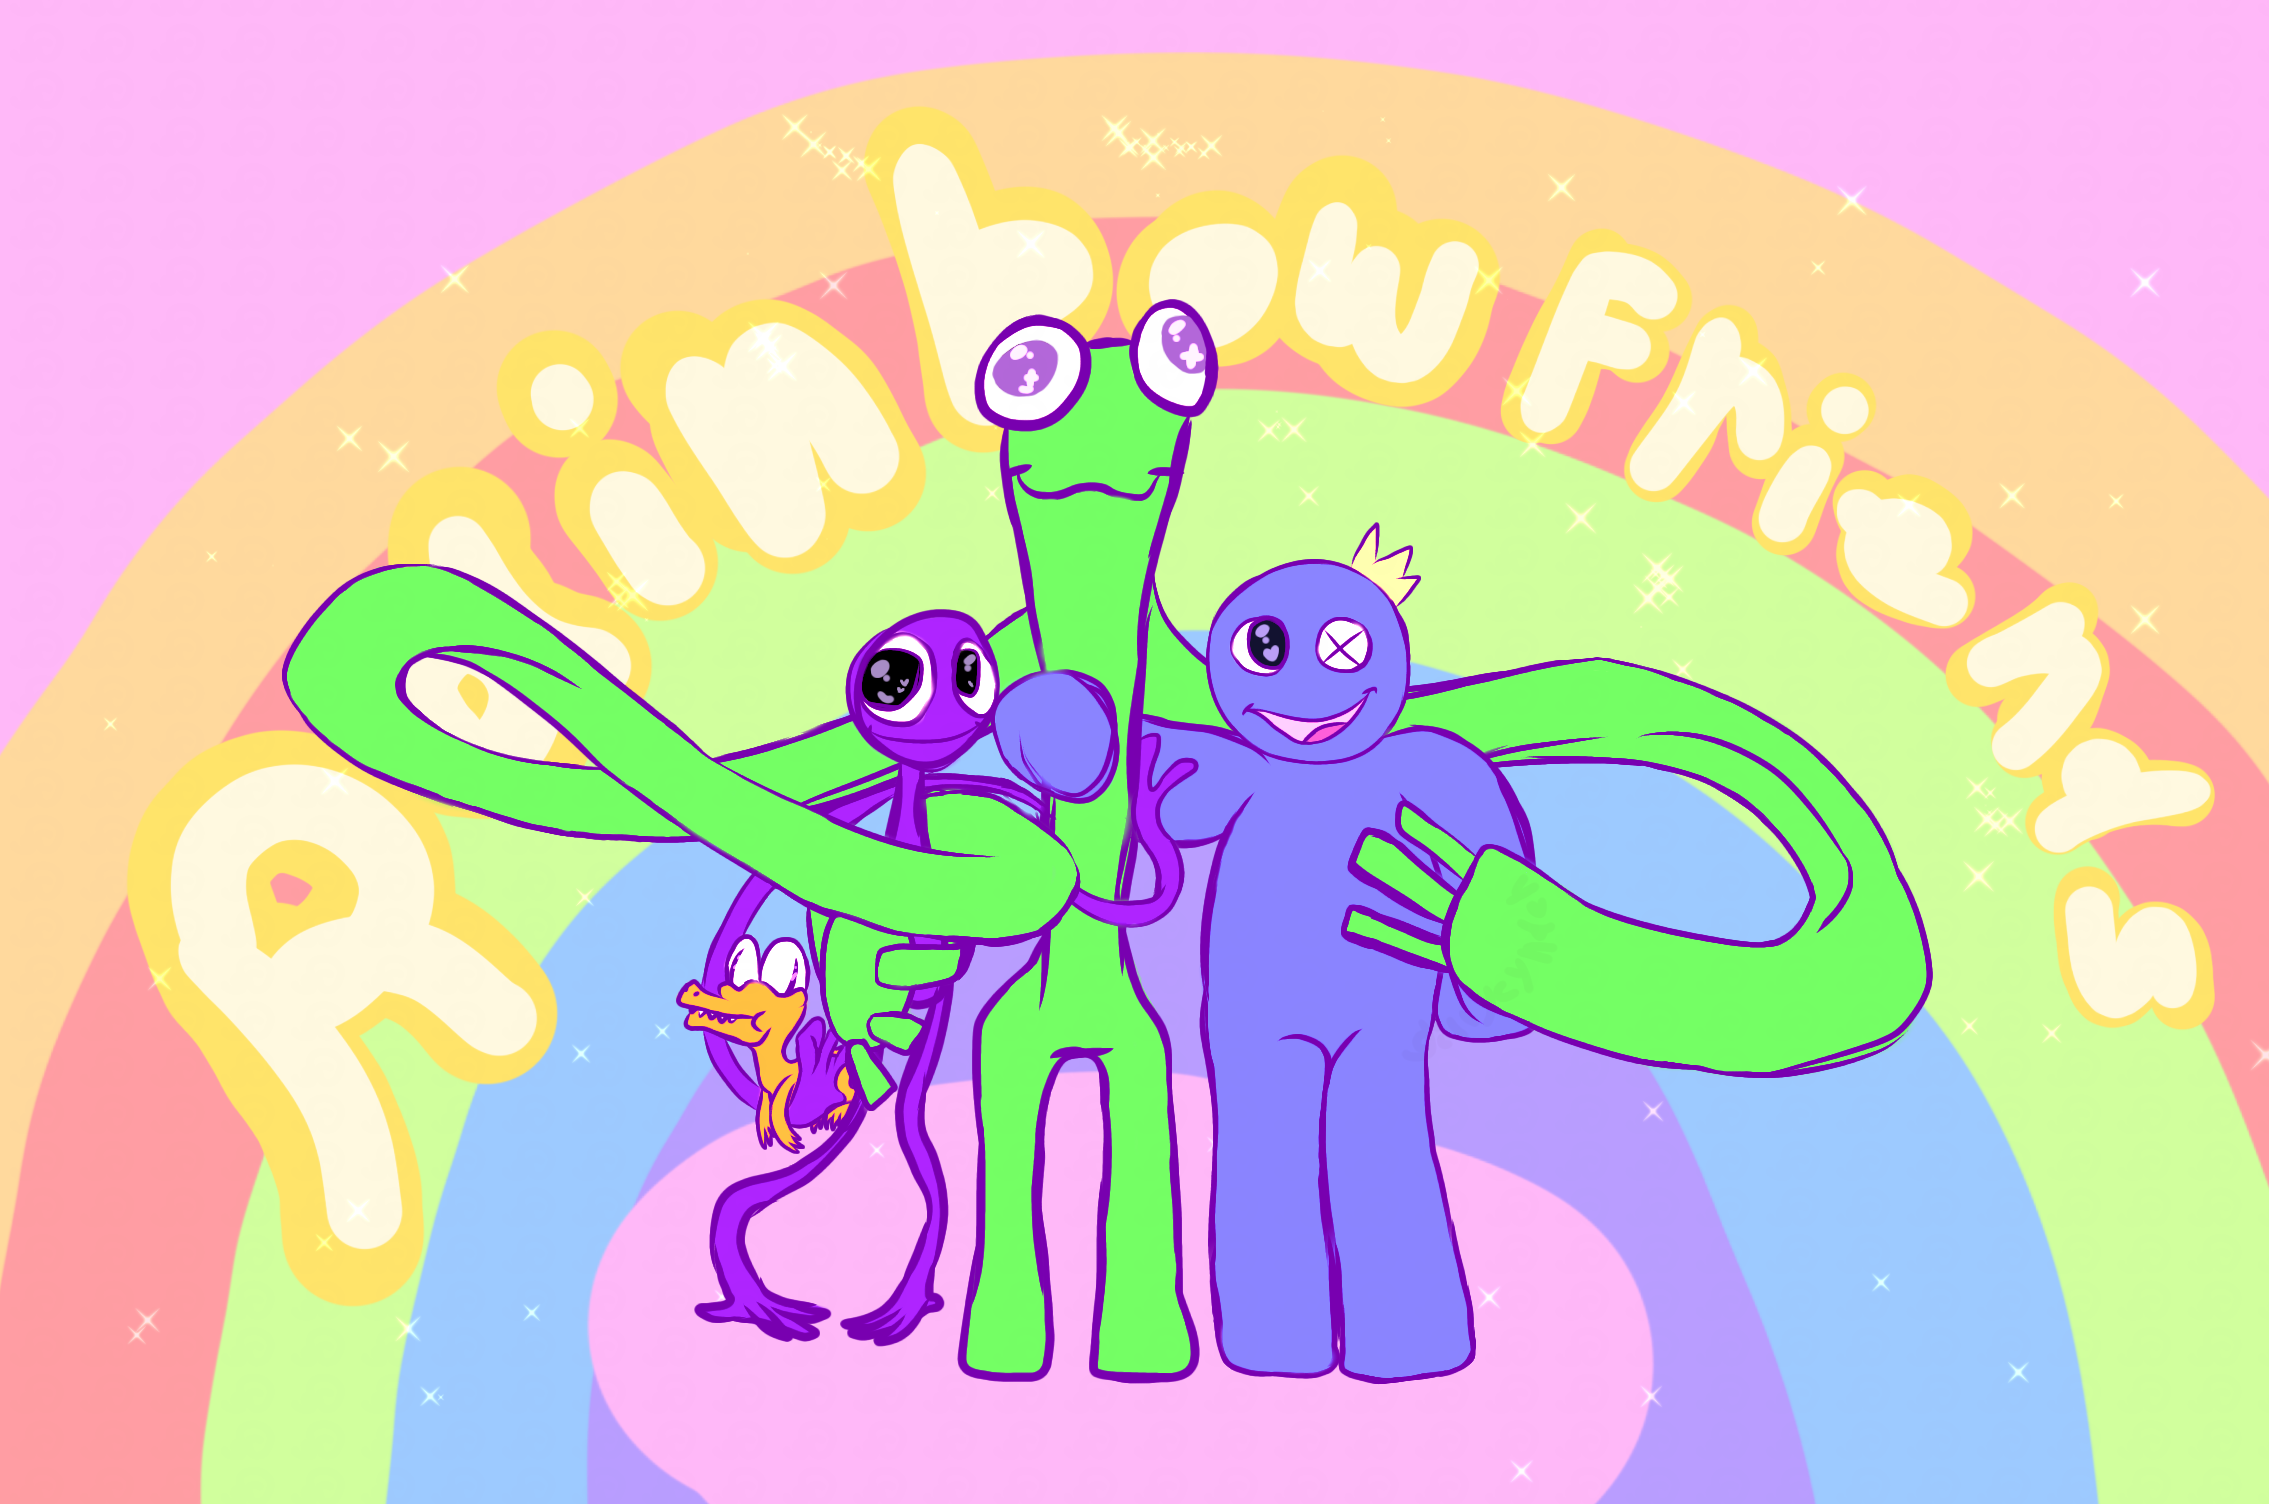 Rainbow Friends Green by RileyToons on DeviantArt